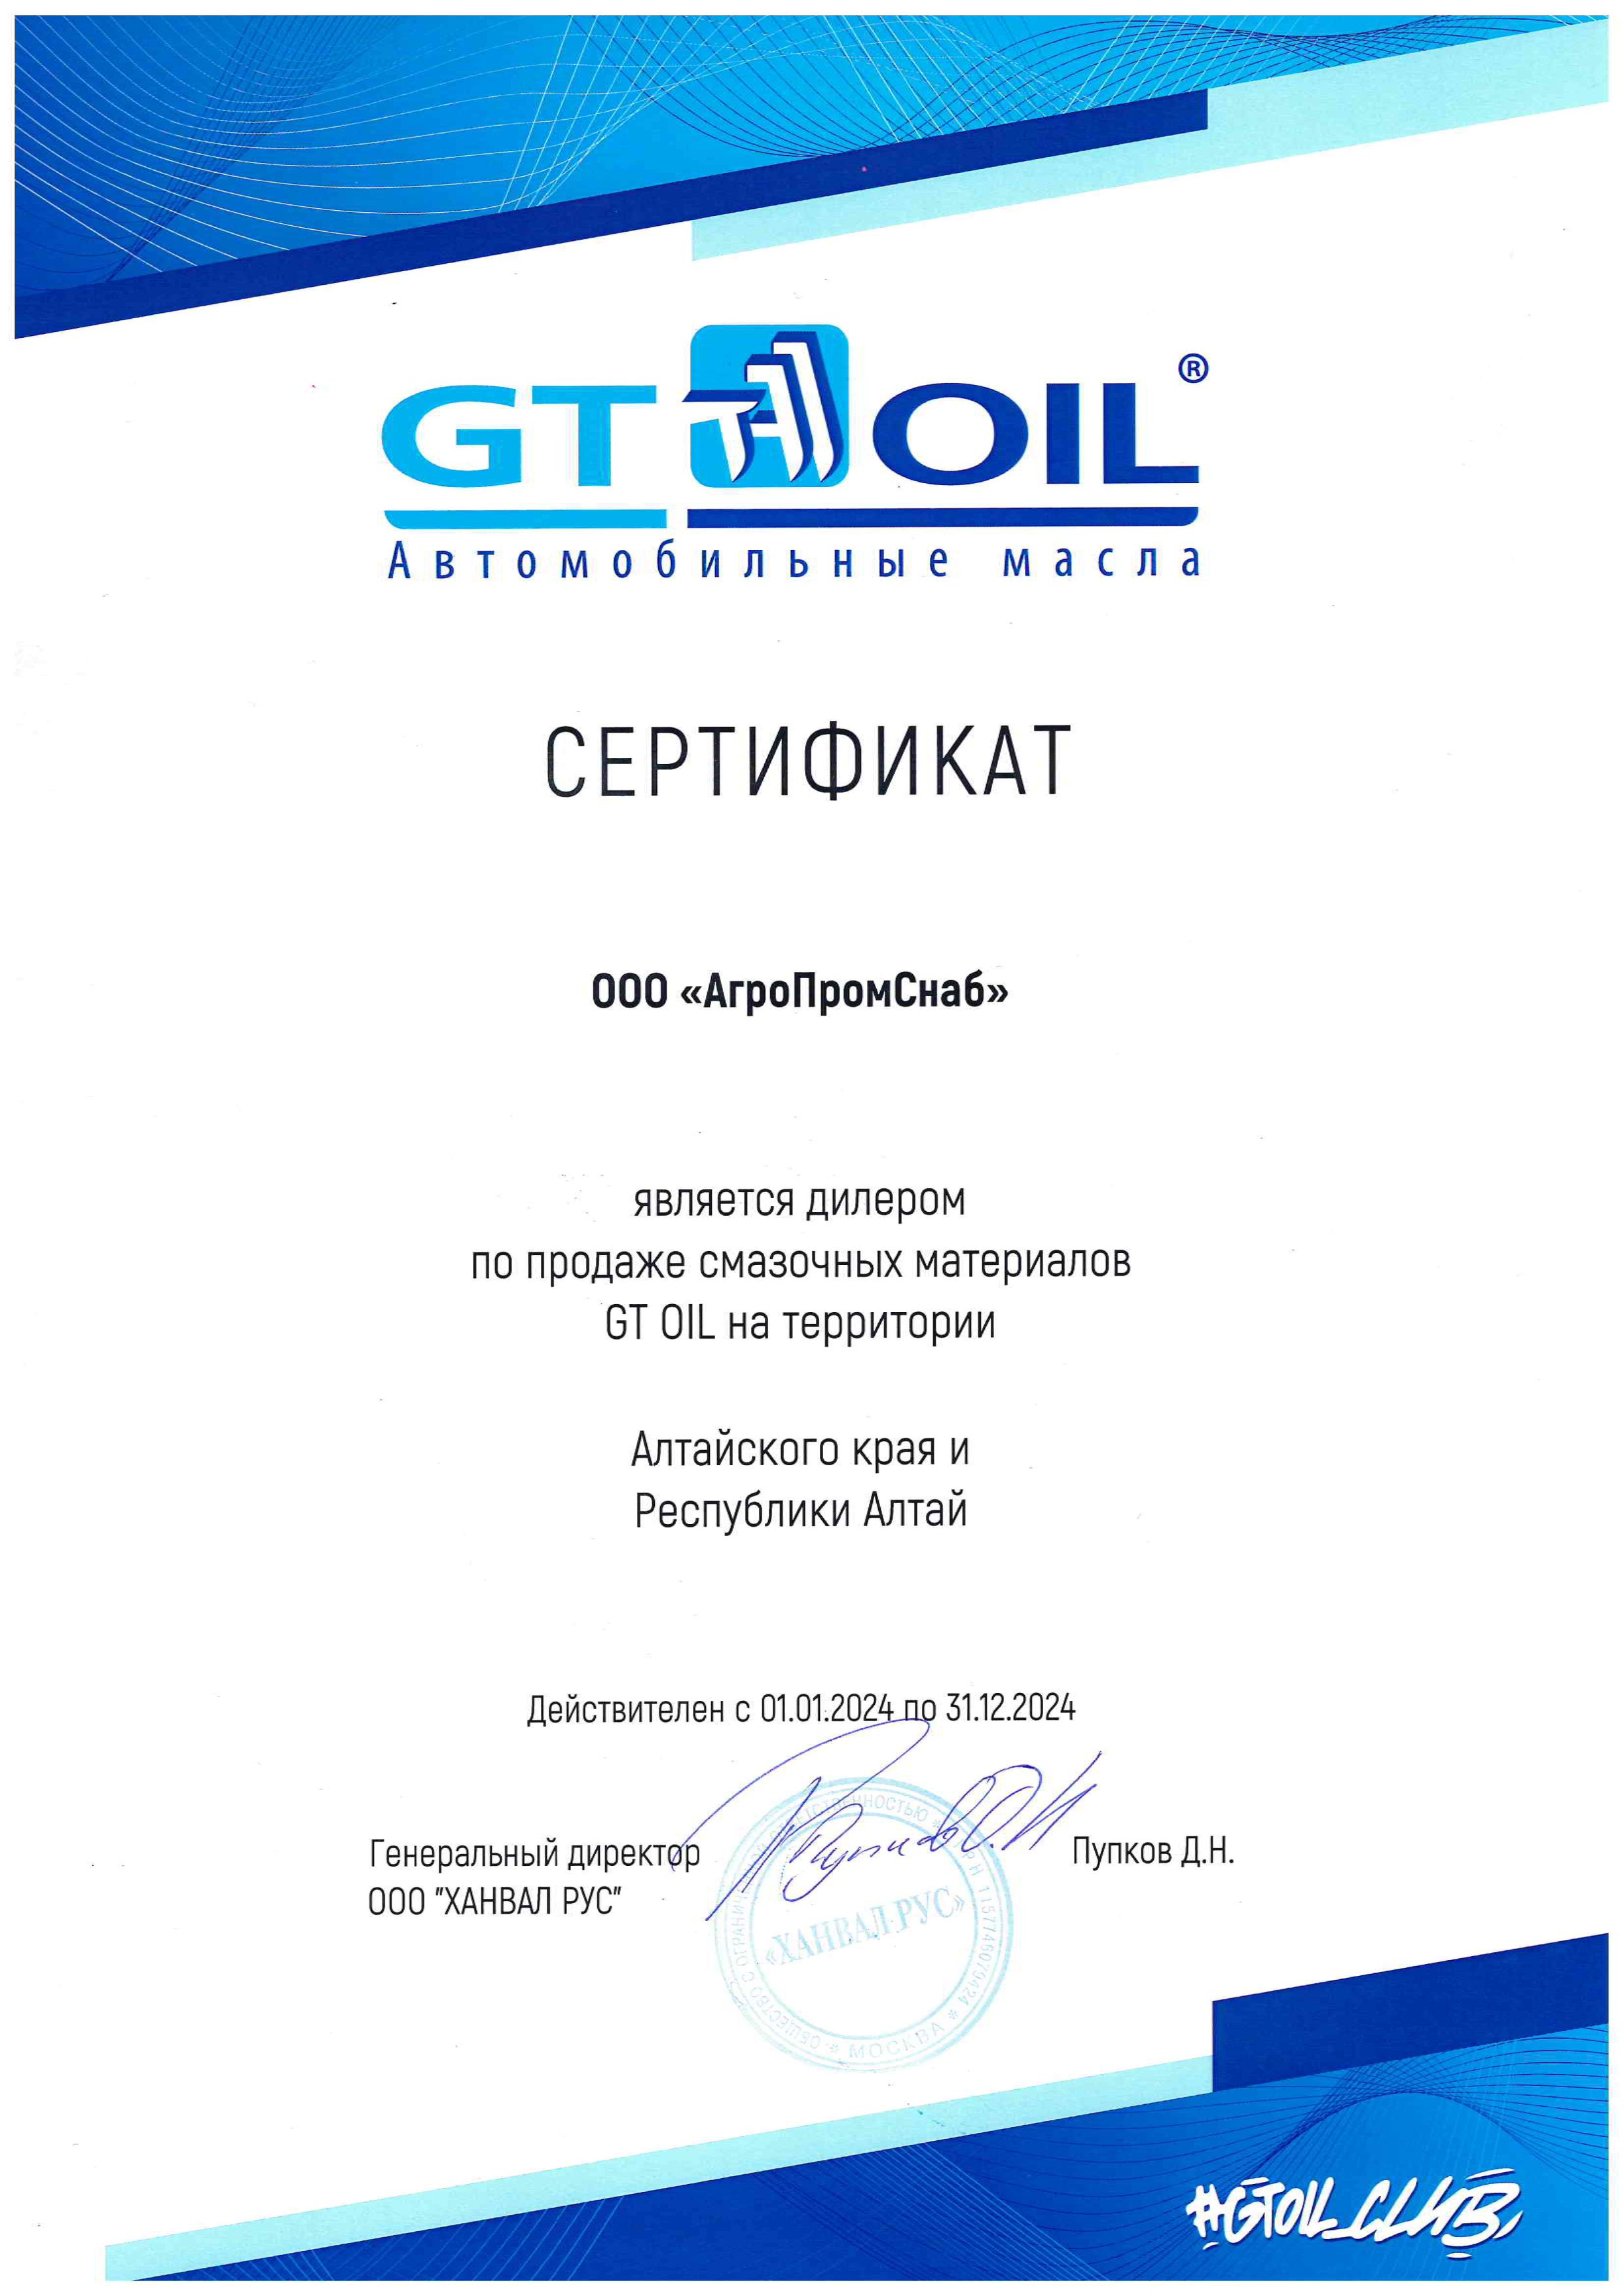 GT Oil - Алтайский край, Республика Алтай